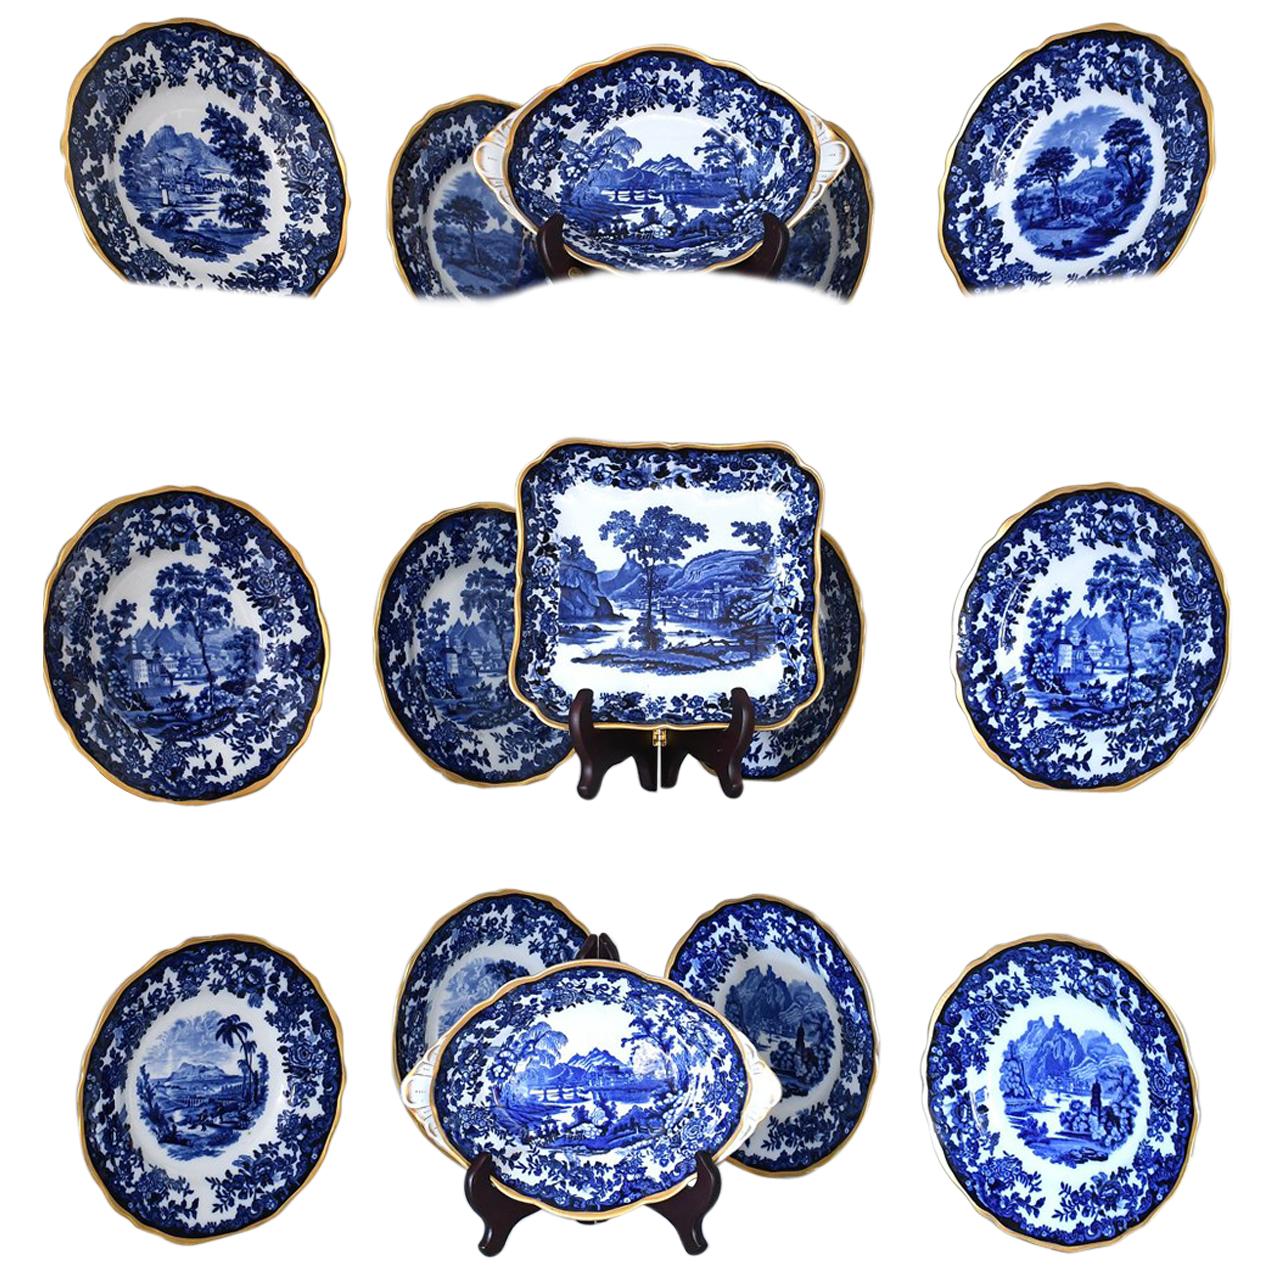 Set of 15 Cobalt Blue & Gold Luncheon & Serving Dishes, Copeland Spode, c. 1900